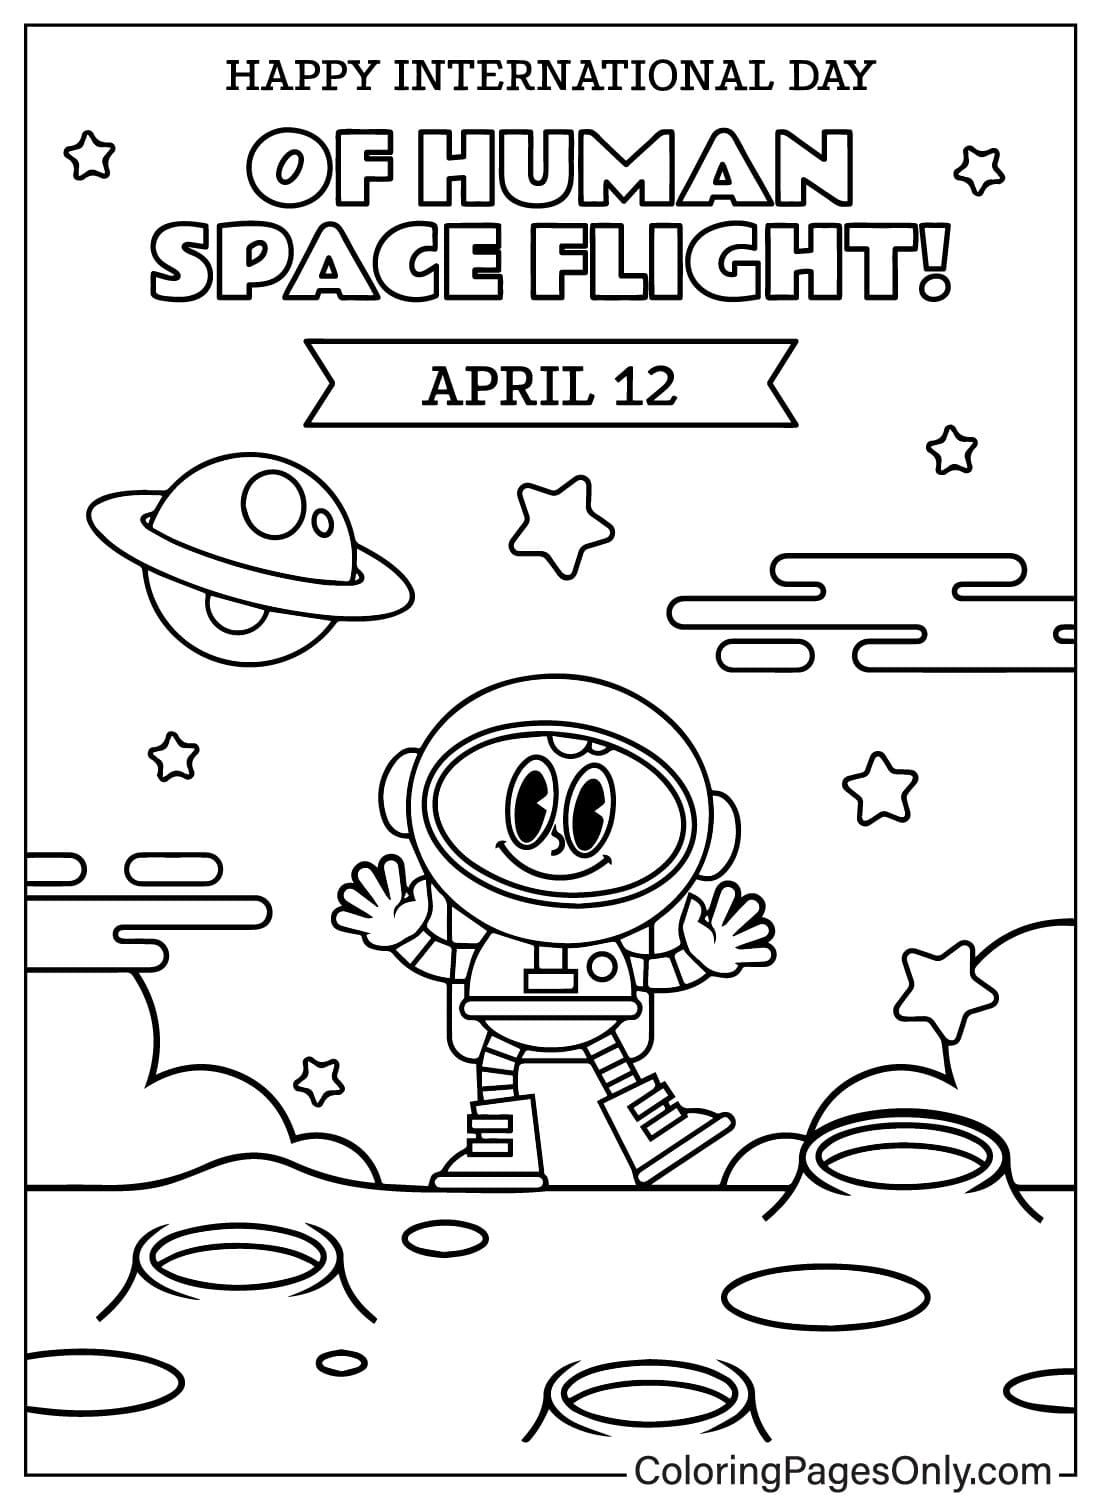 International Day of Human Space Flight Coloring Page to Print from International Day of Human Space Flight